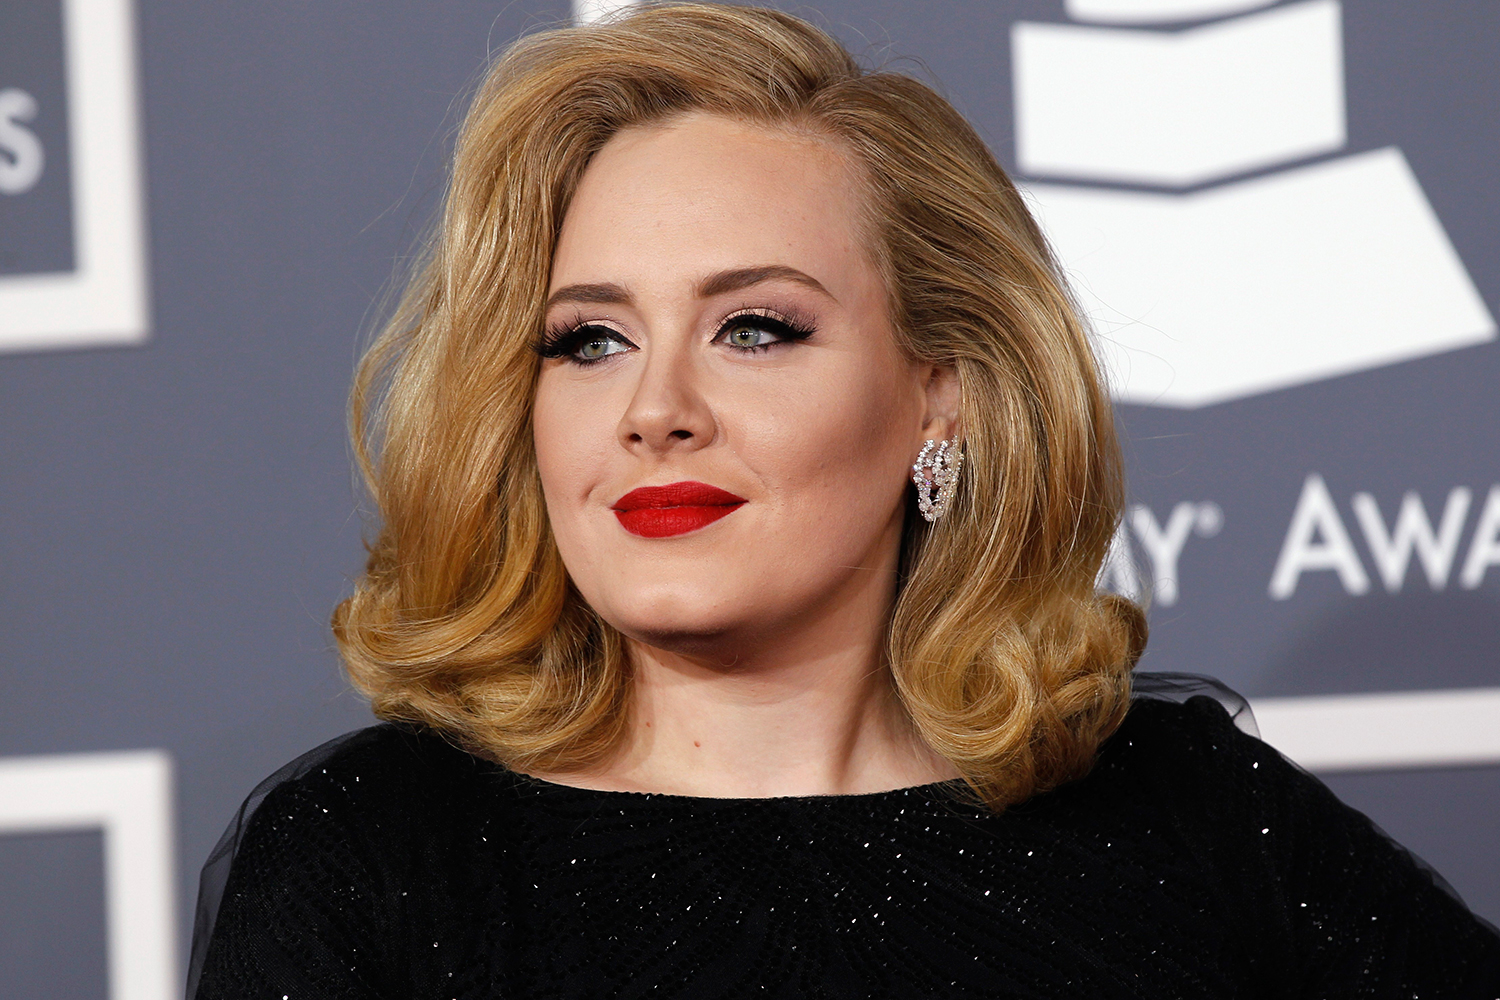 Adele's new album will not be streamed